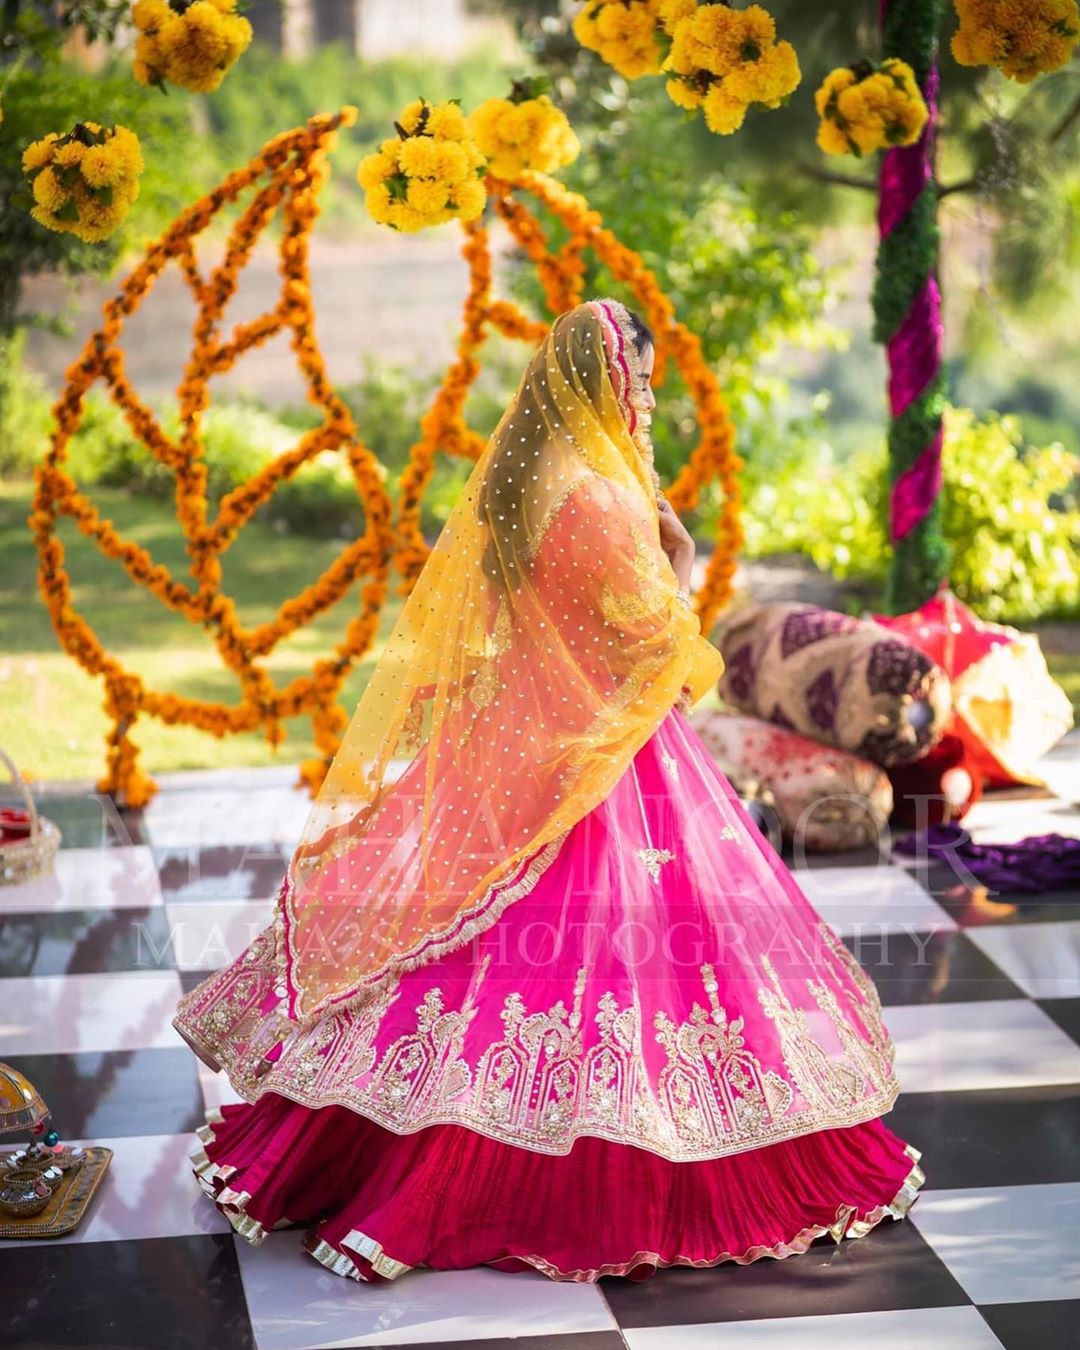 Nimra Khan is Looking Beautiful in her Latest Bridal Shoot for Faiza Salon